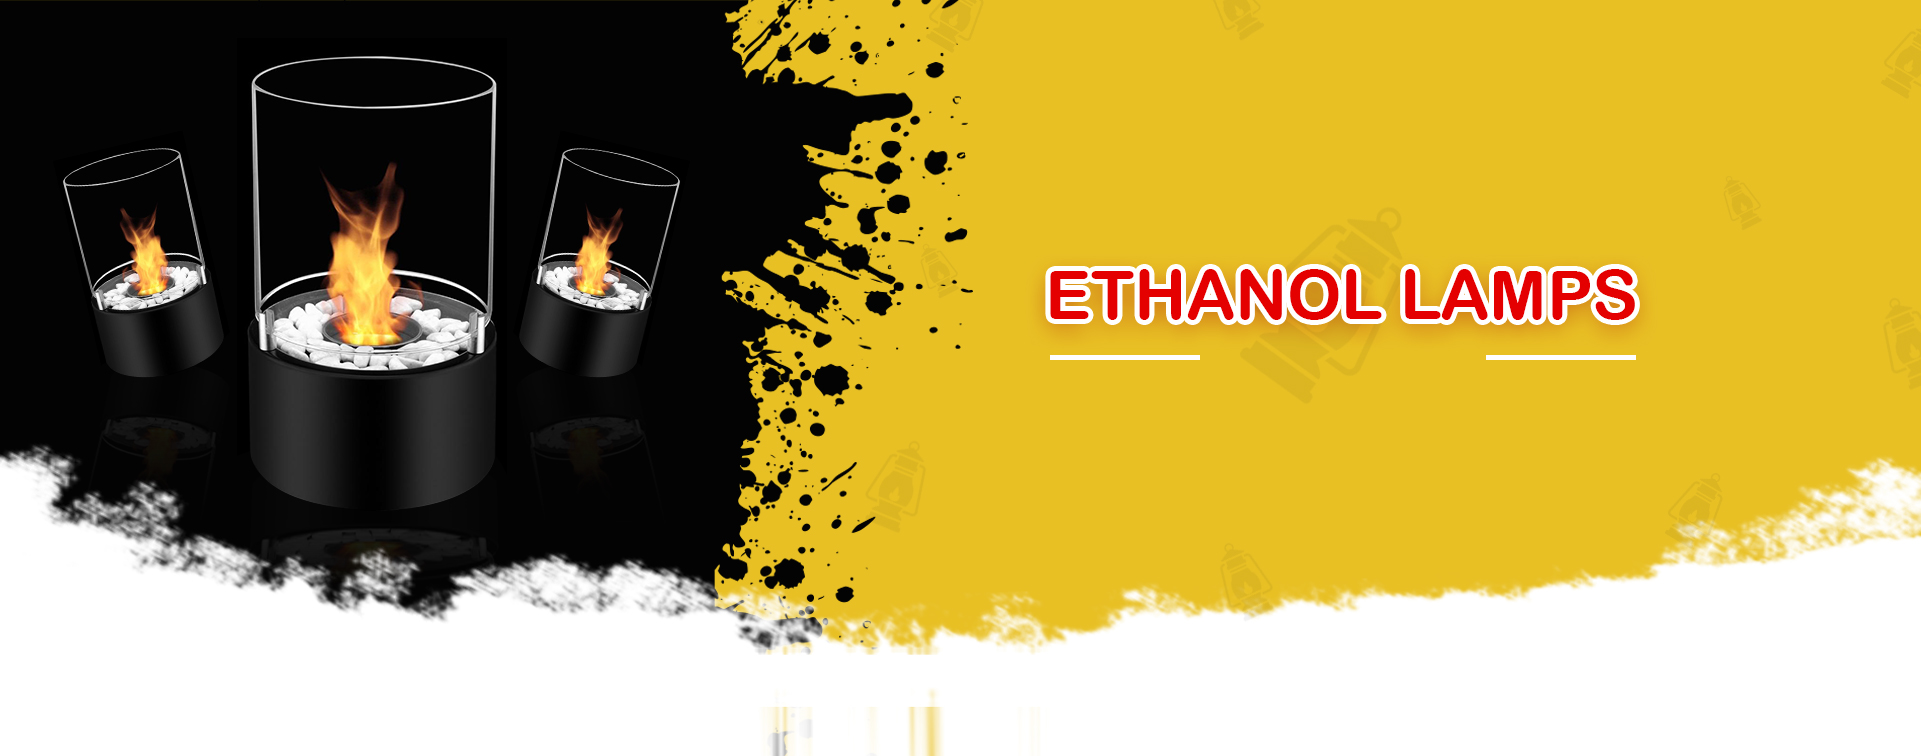 Ethanol Lamp @wallasia Pvt Ltd - Graphic Design - HD Wallpaper 